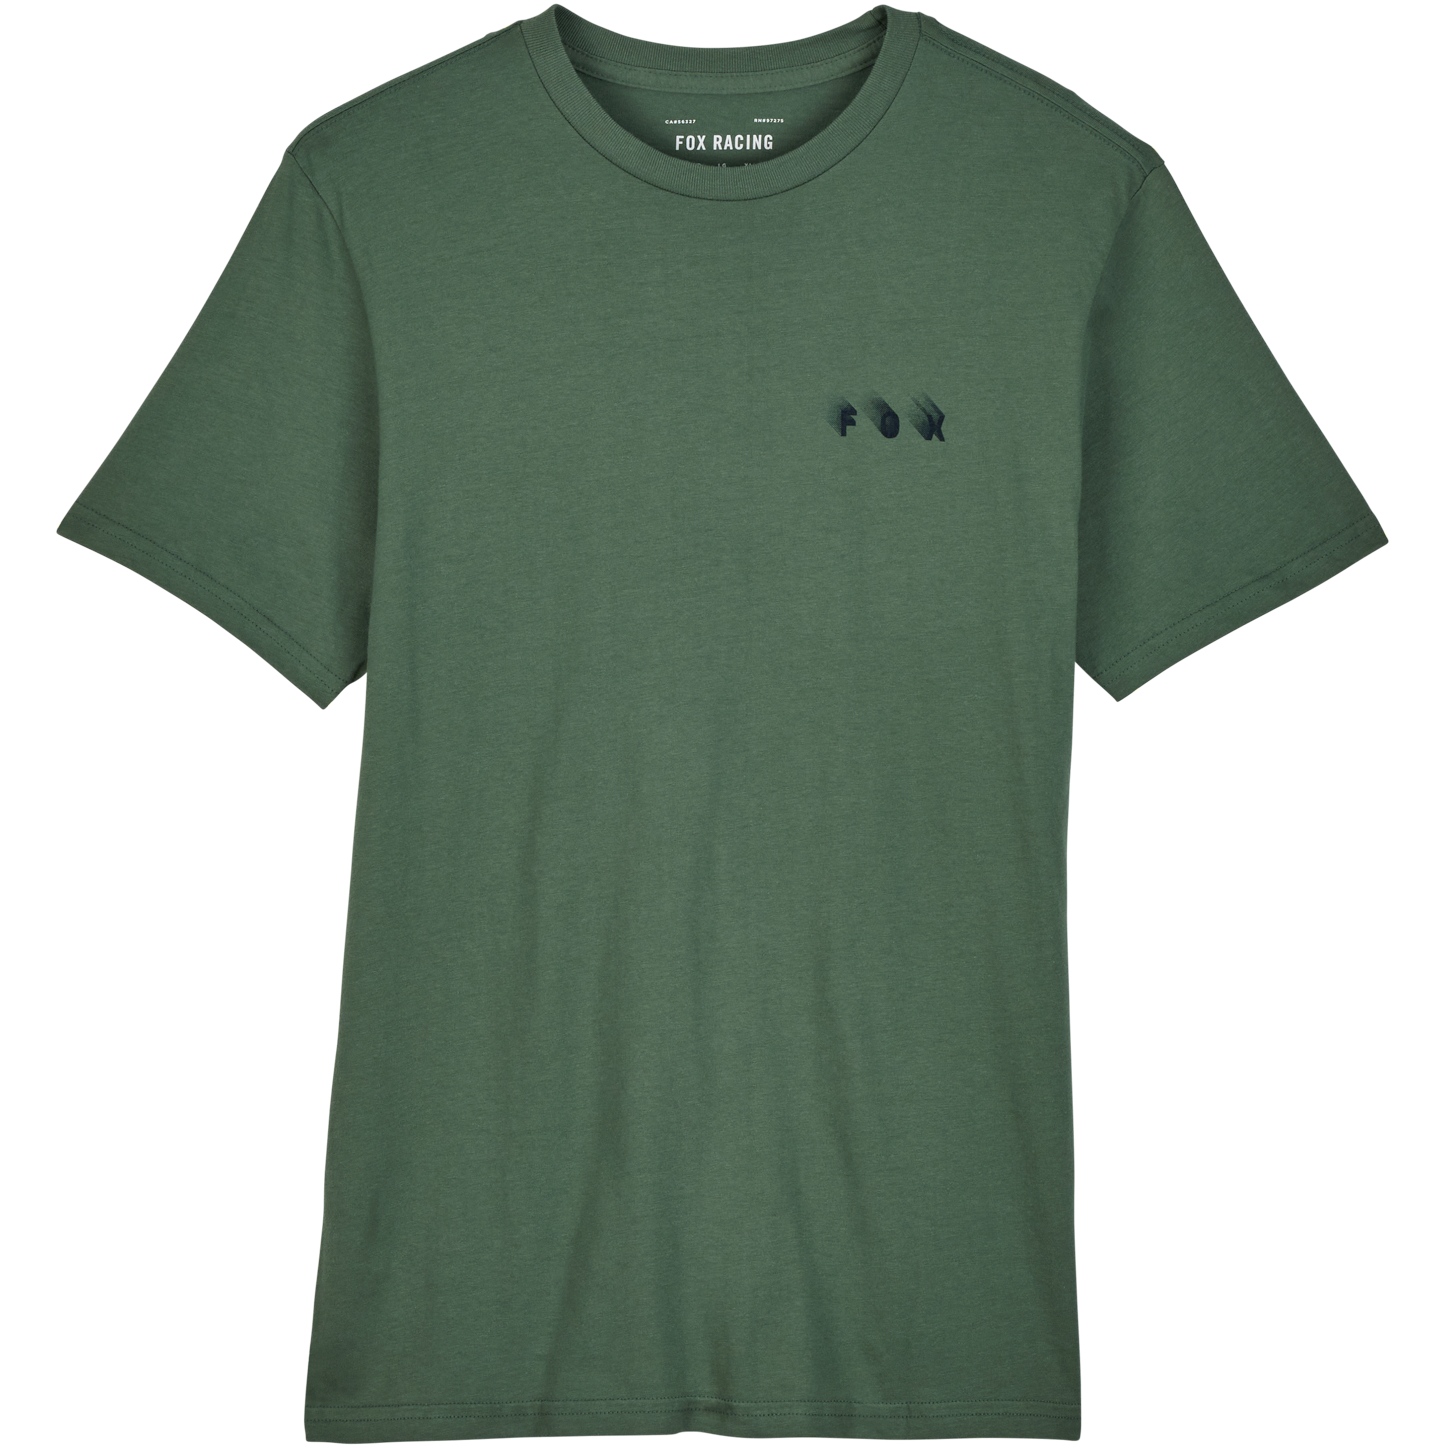 Productfoto van FOX Wayfaring Premium Shirt Heren - hunter green